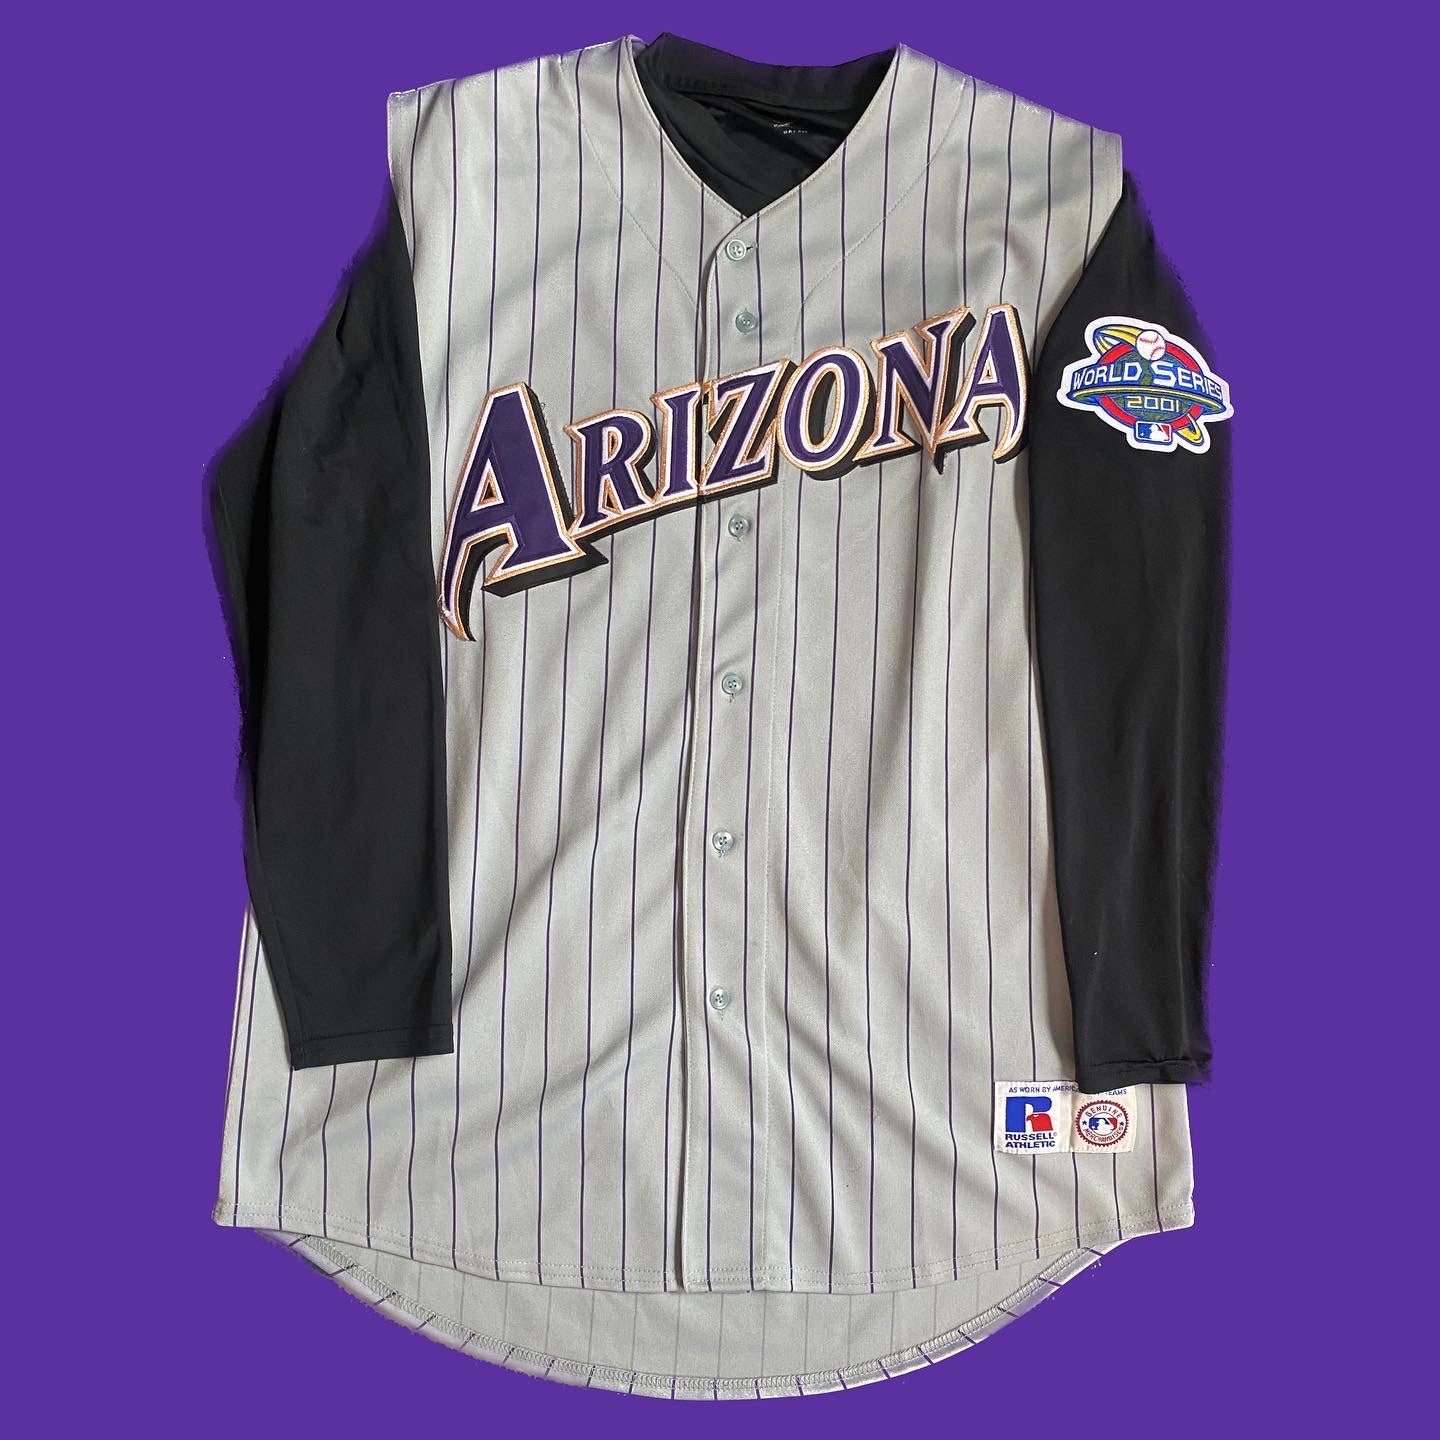 2001 world series arizona diamondbacks jersey